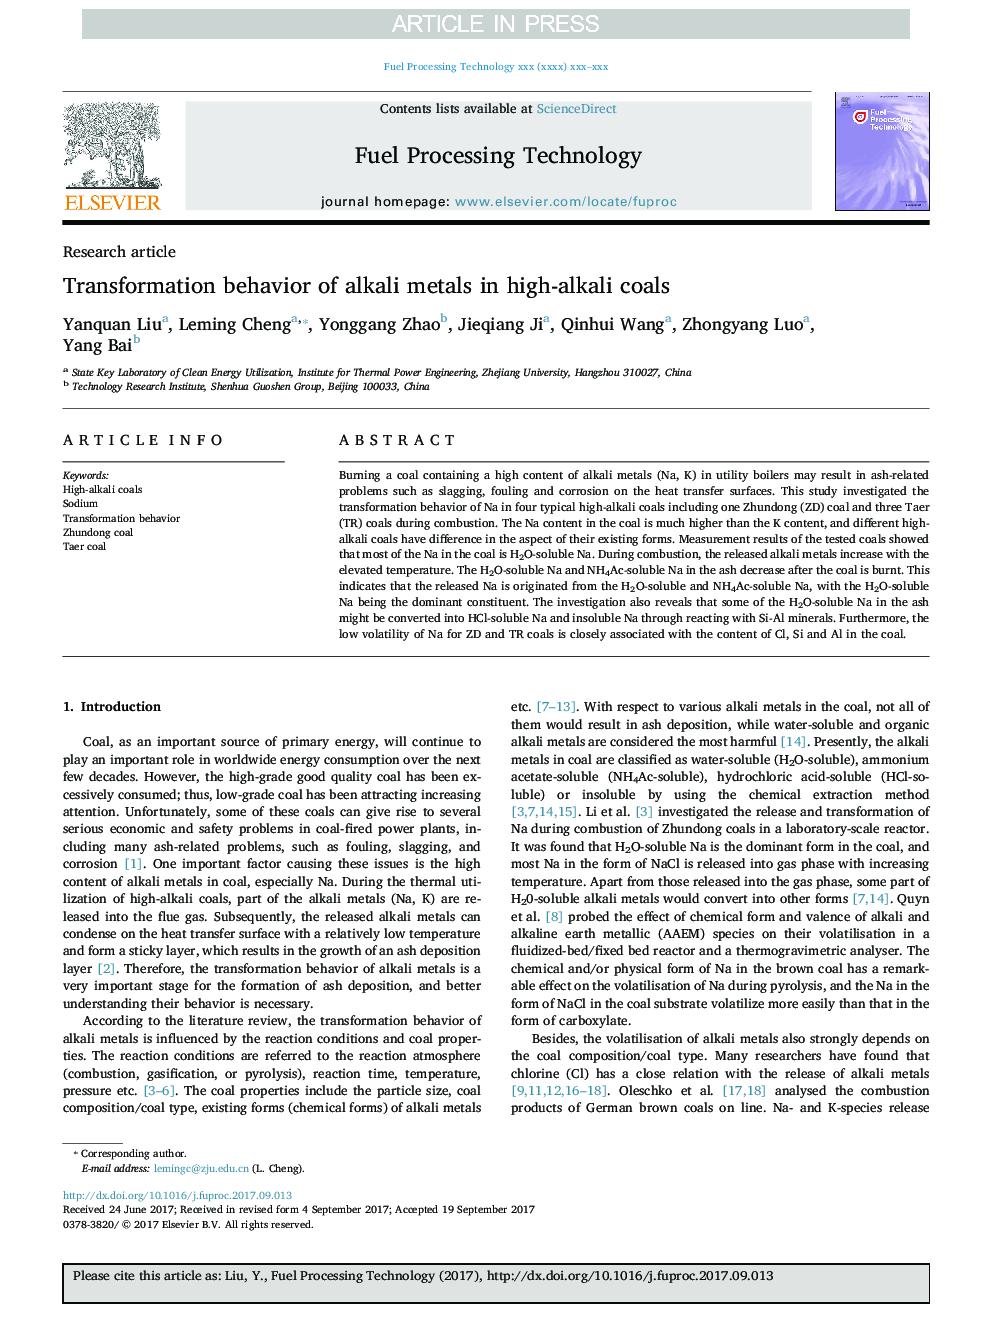 Transformation behavior of alkali metals in high-alkali coals